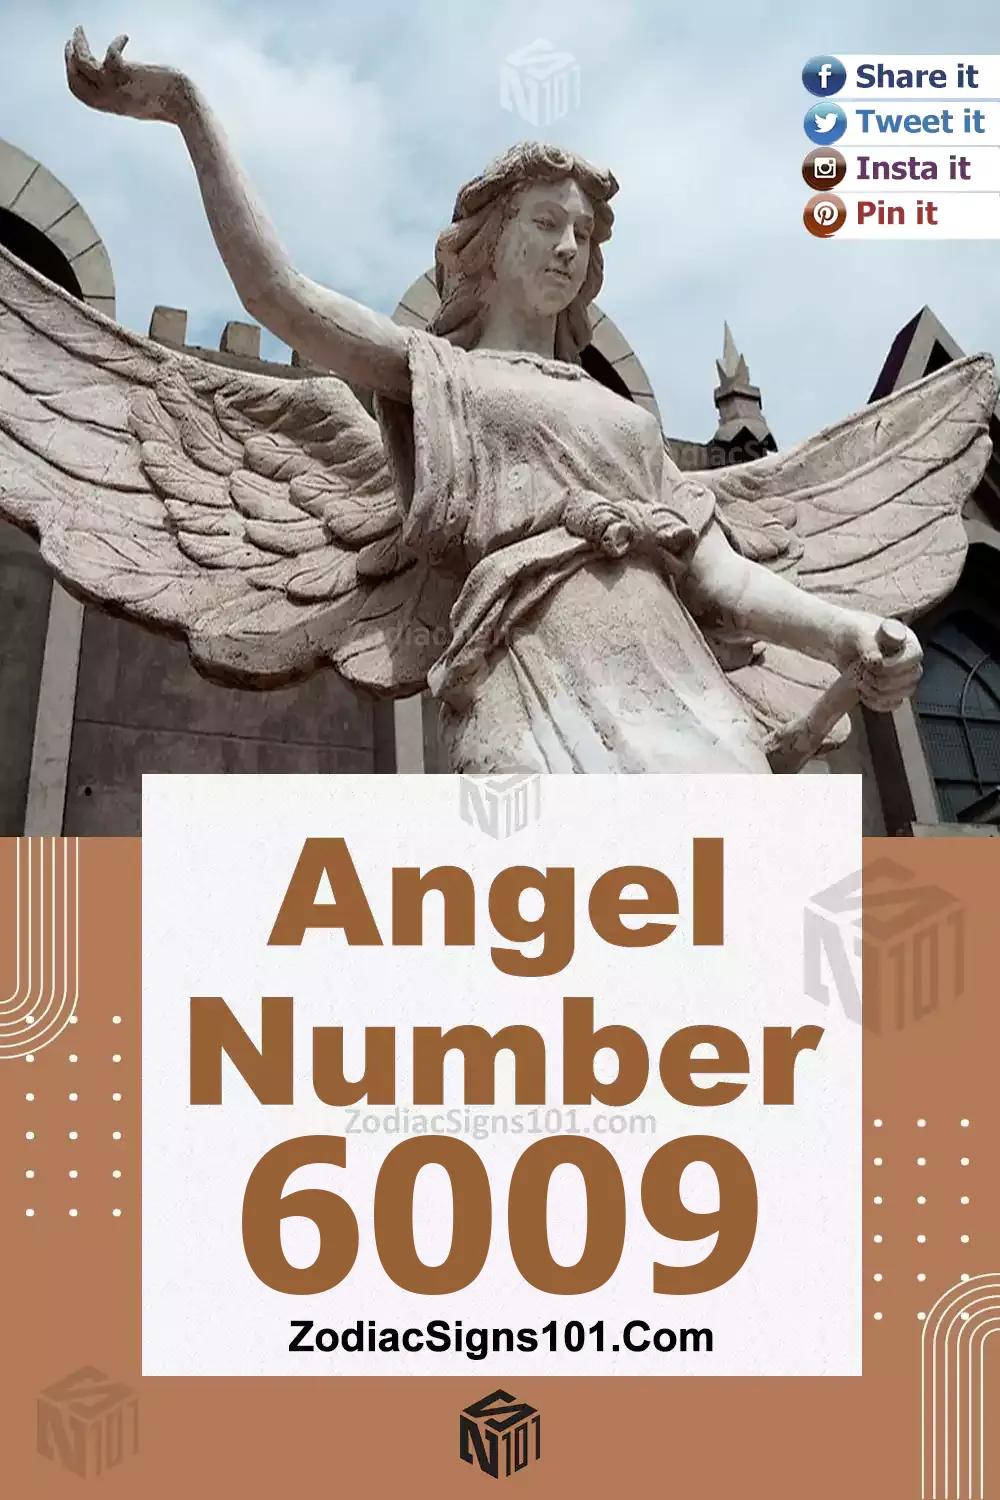 6009-Angel-Number-Meaning.jpg